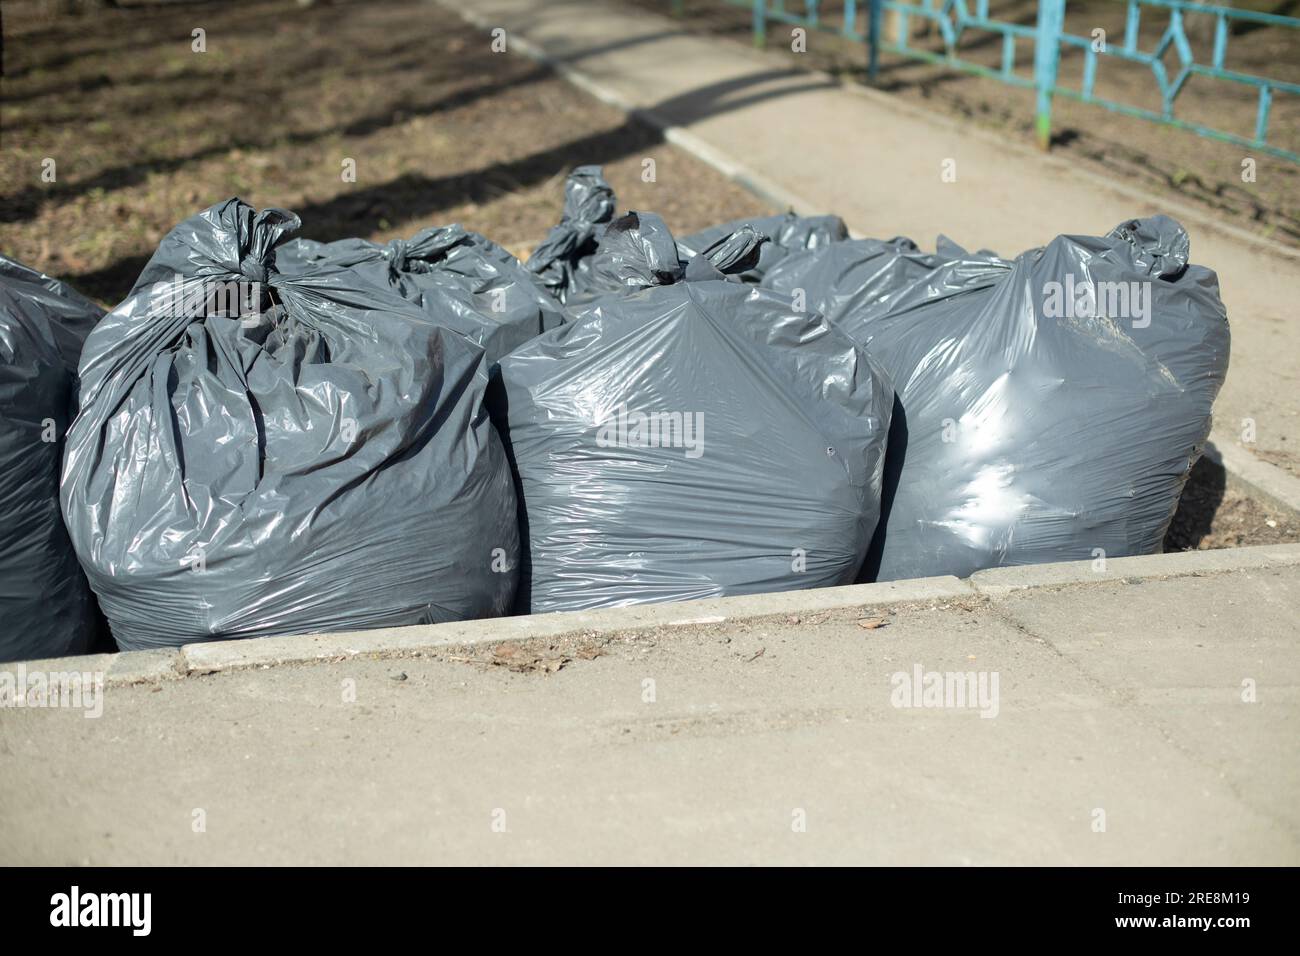 https://c8.alamy.com/comp/2RE8M19/garbage-bags-in-park-black-packets-yard-cleaning-waste-bag-2RE8M19.jpg